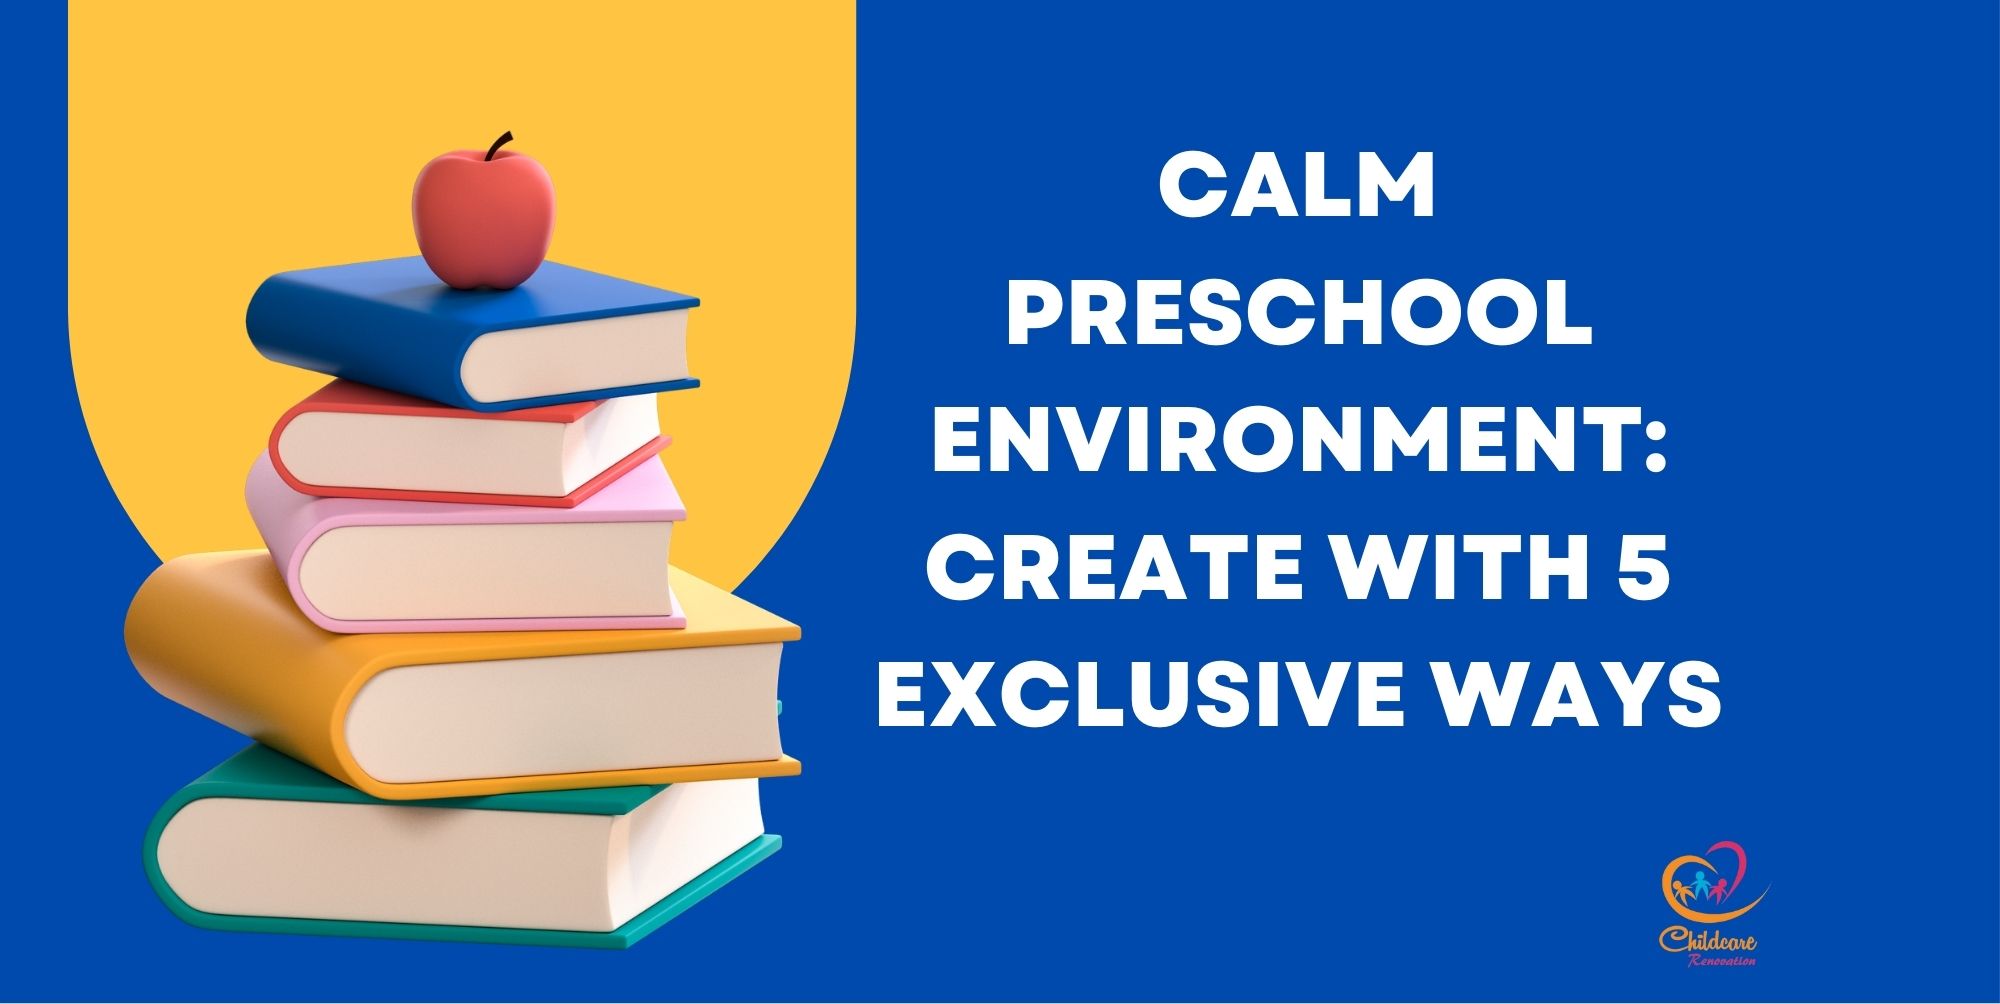 Calm Preschool Environment: Create With 5 Exclusive Ways